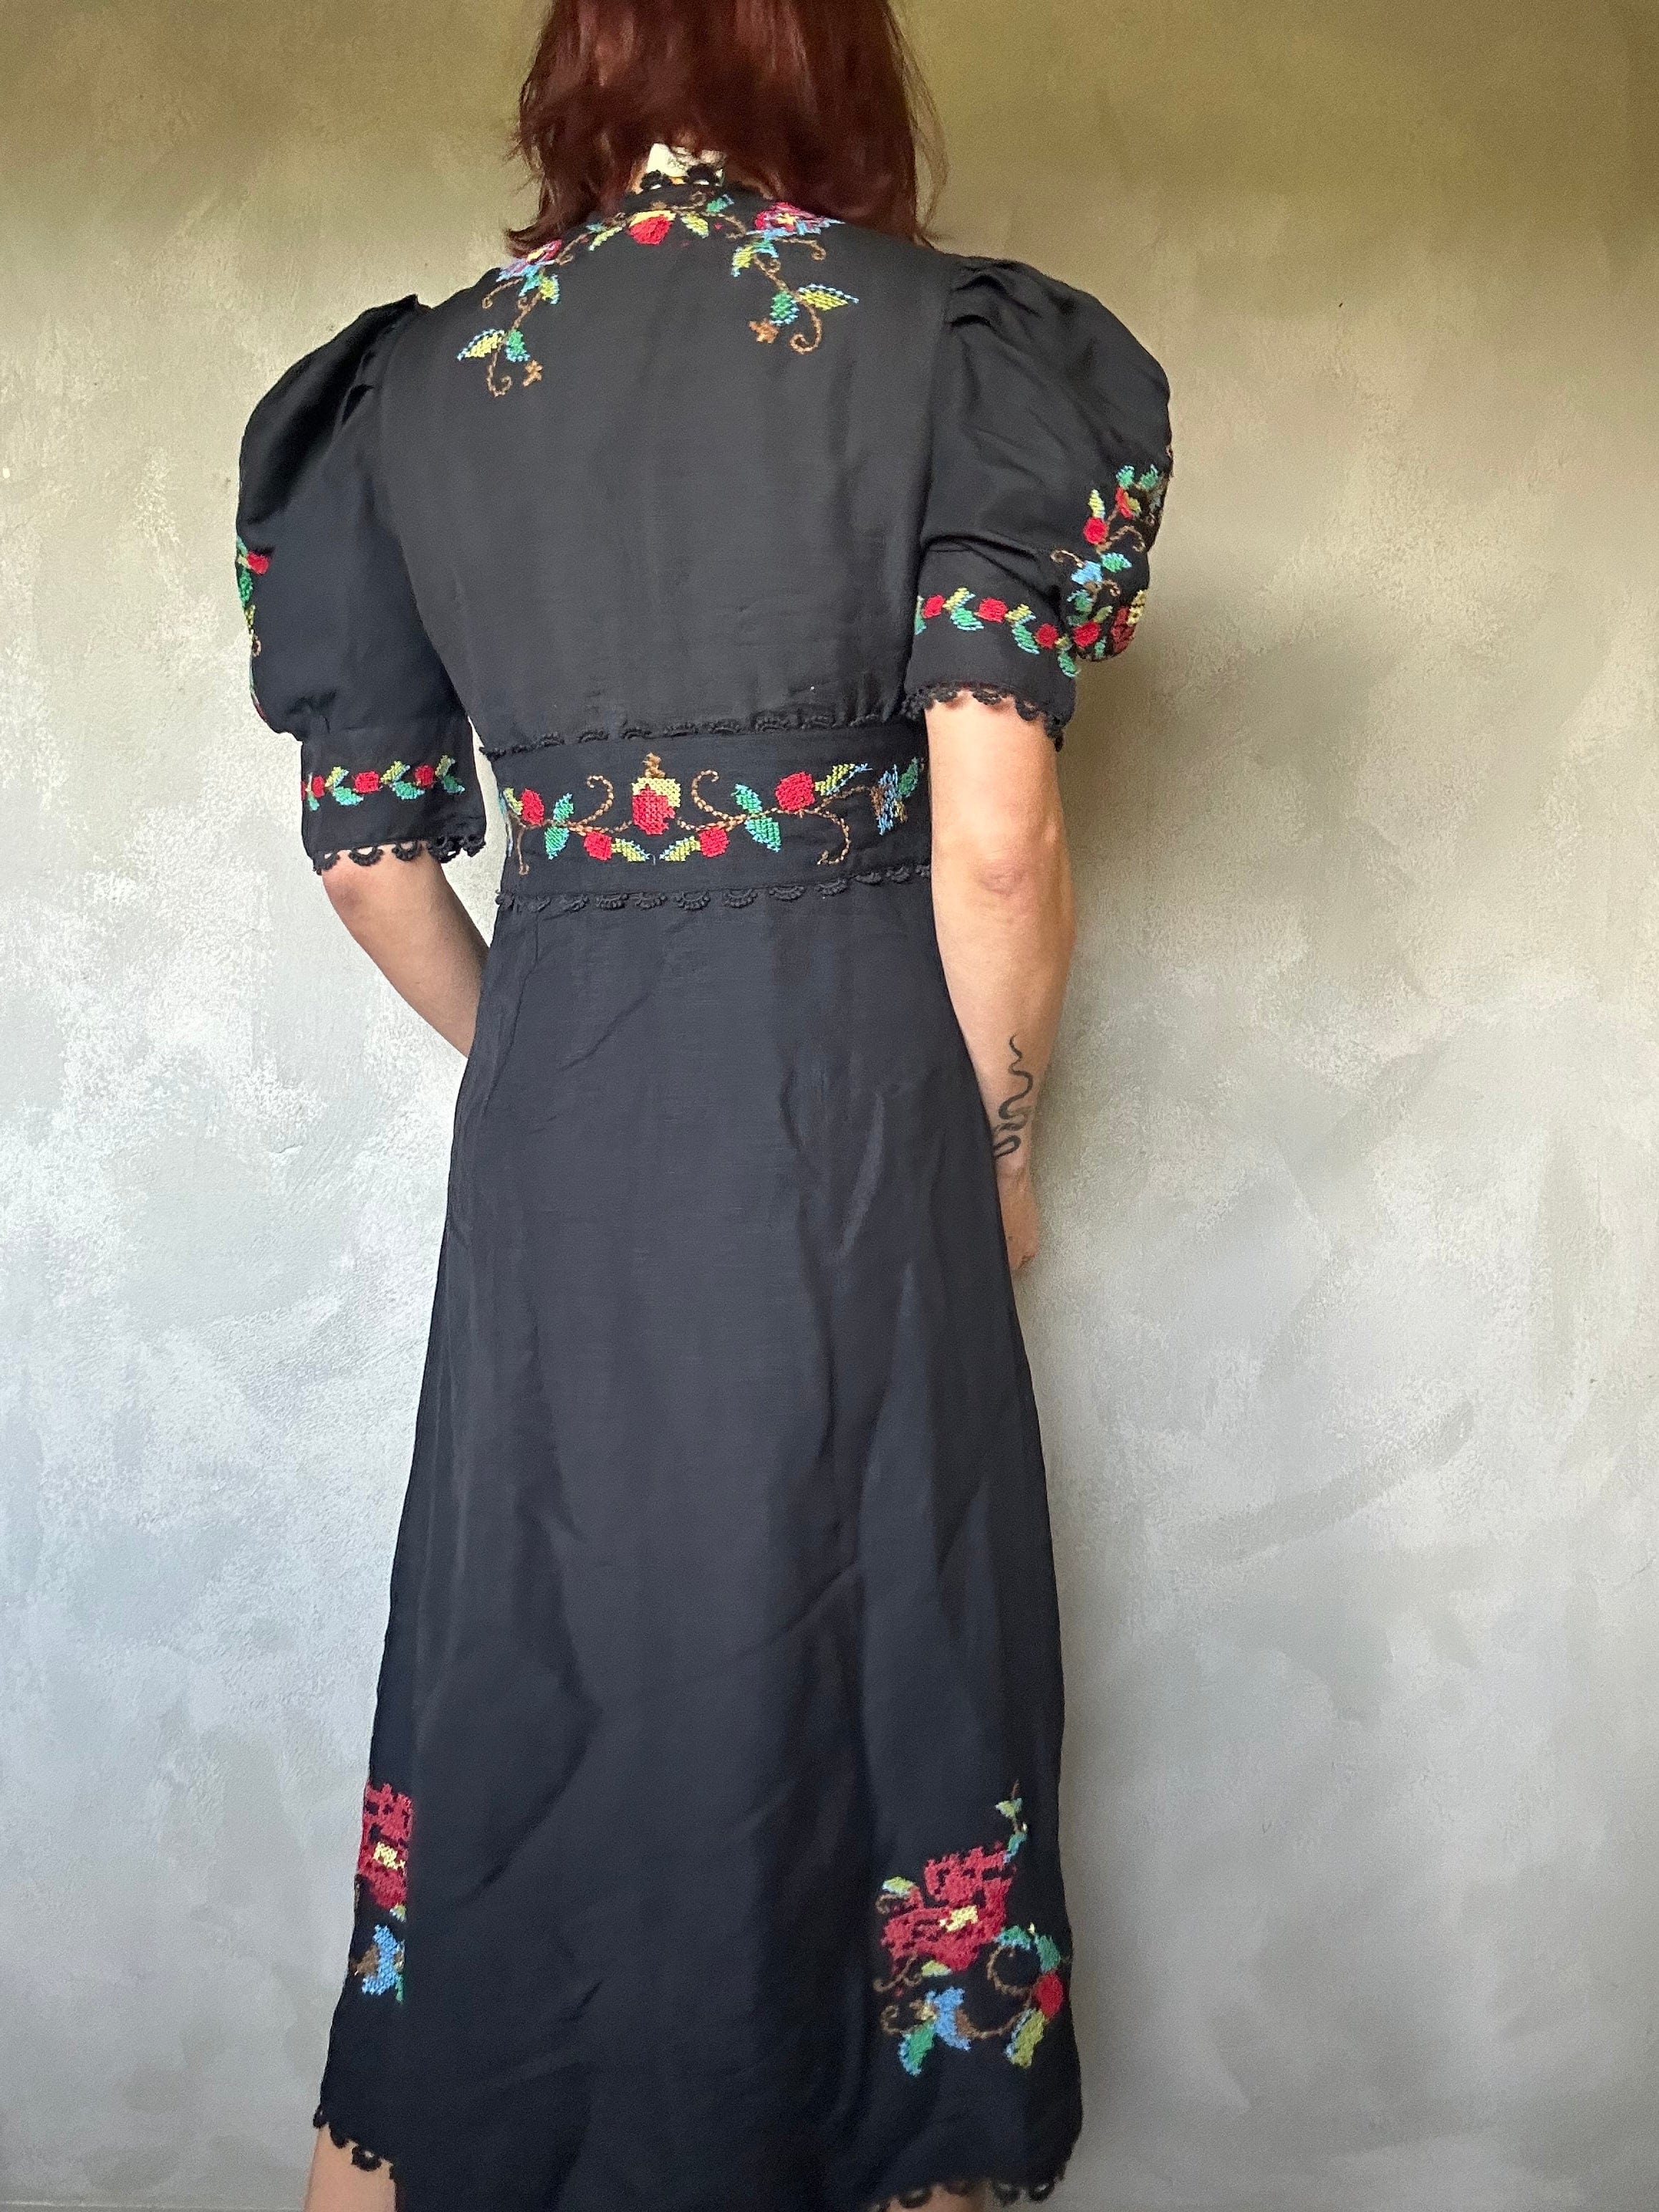 Sistergolden Dress Black Orchard Dress